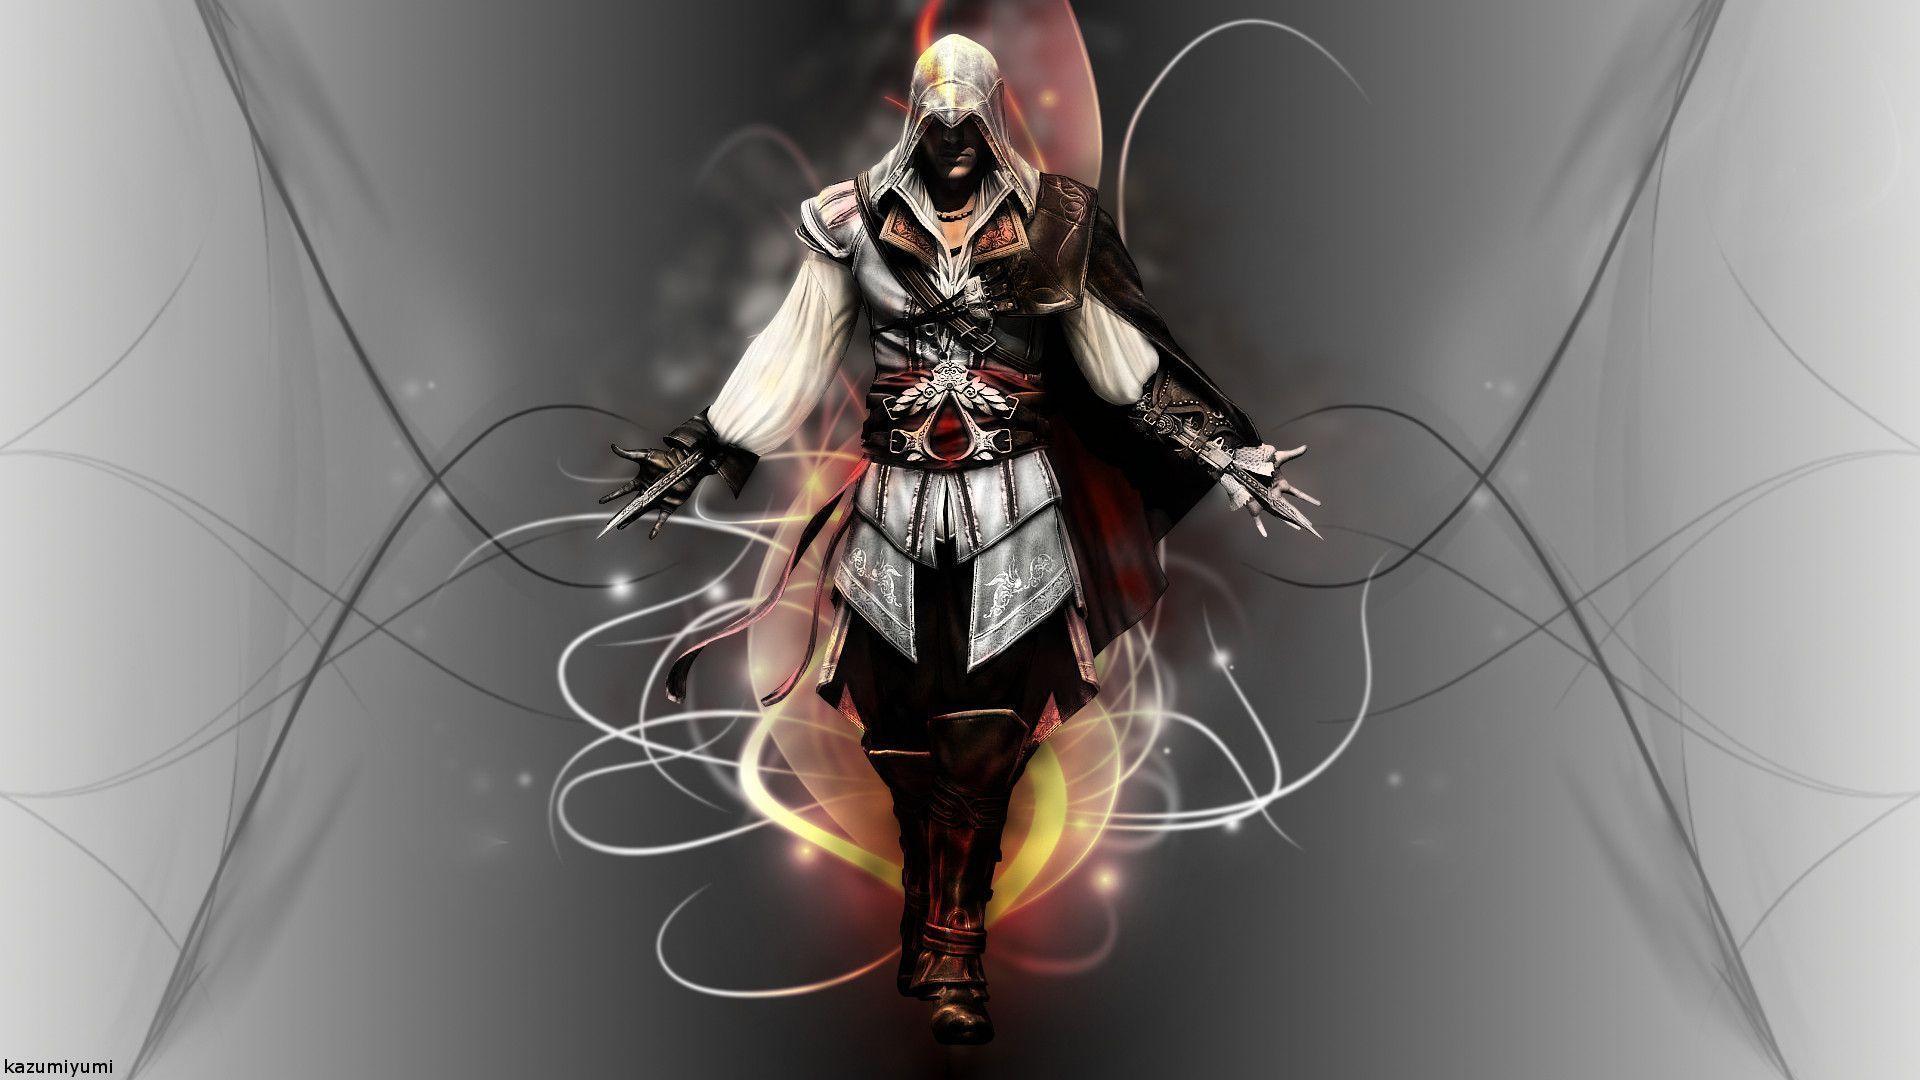 Ezio Assassin&;s Creed Revelations Wallpaper. Best Wallpaper Fan